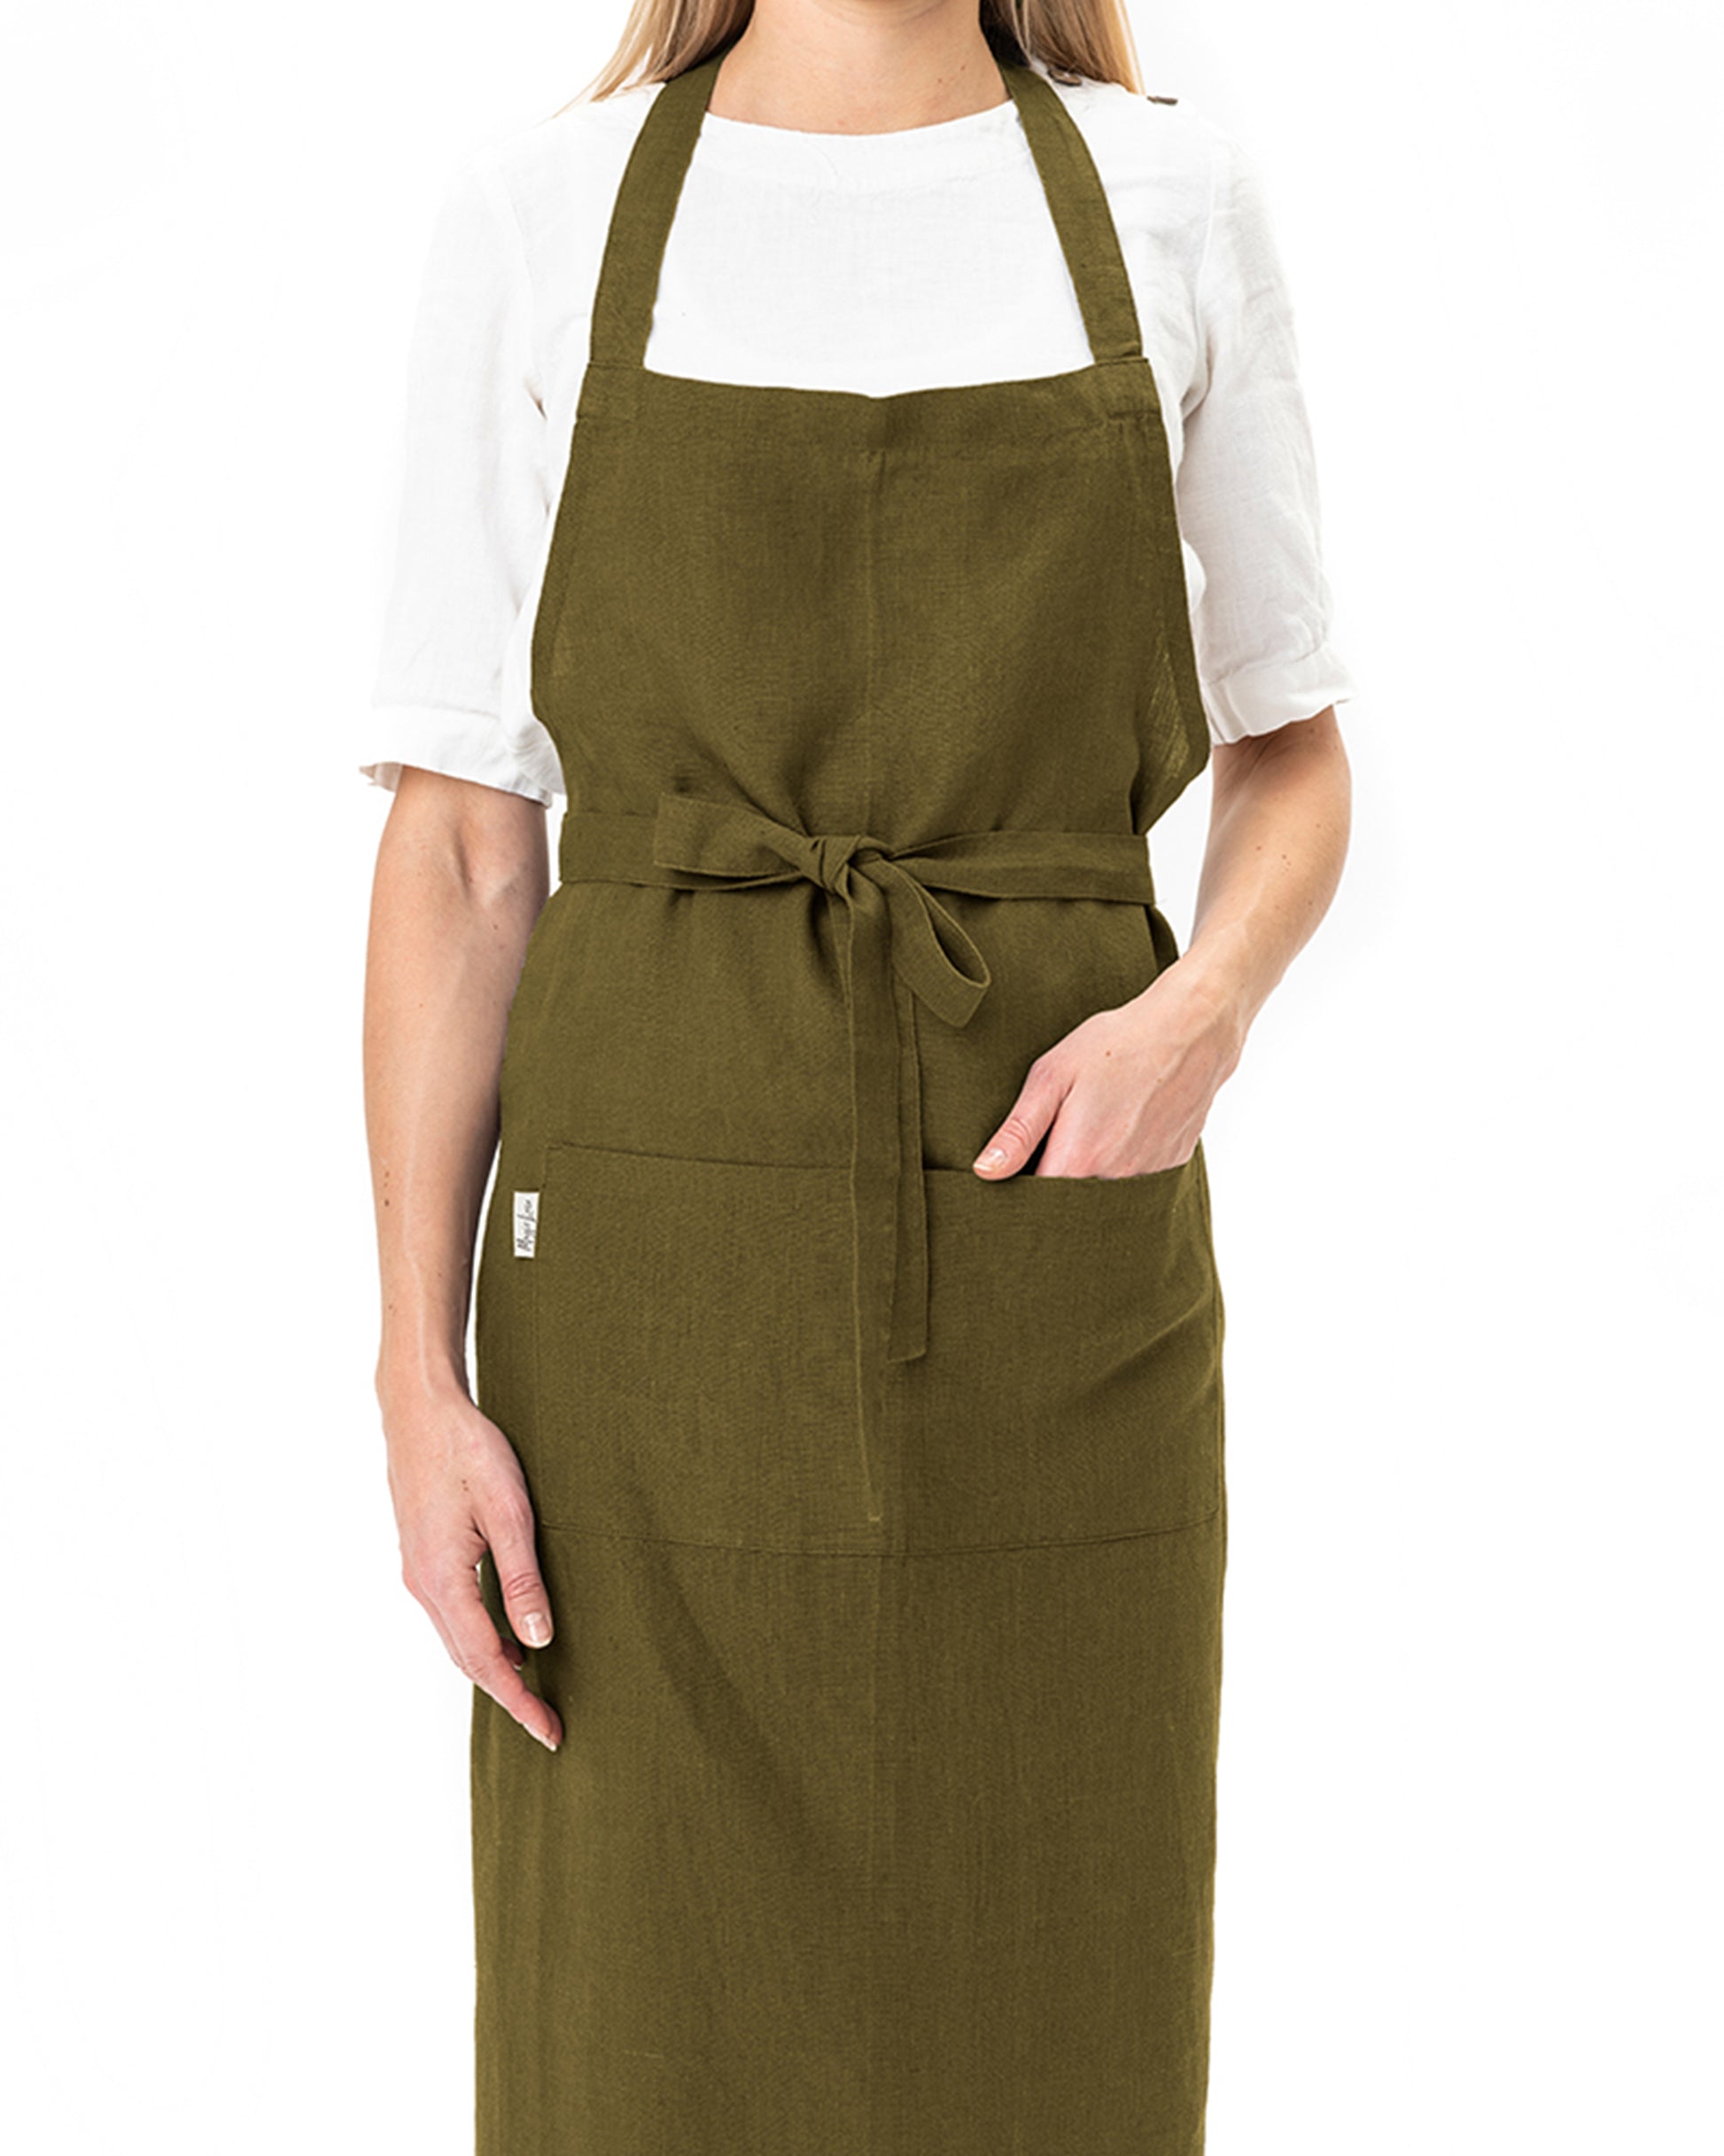 Linen bib apron in Olive green - MagicLinen